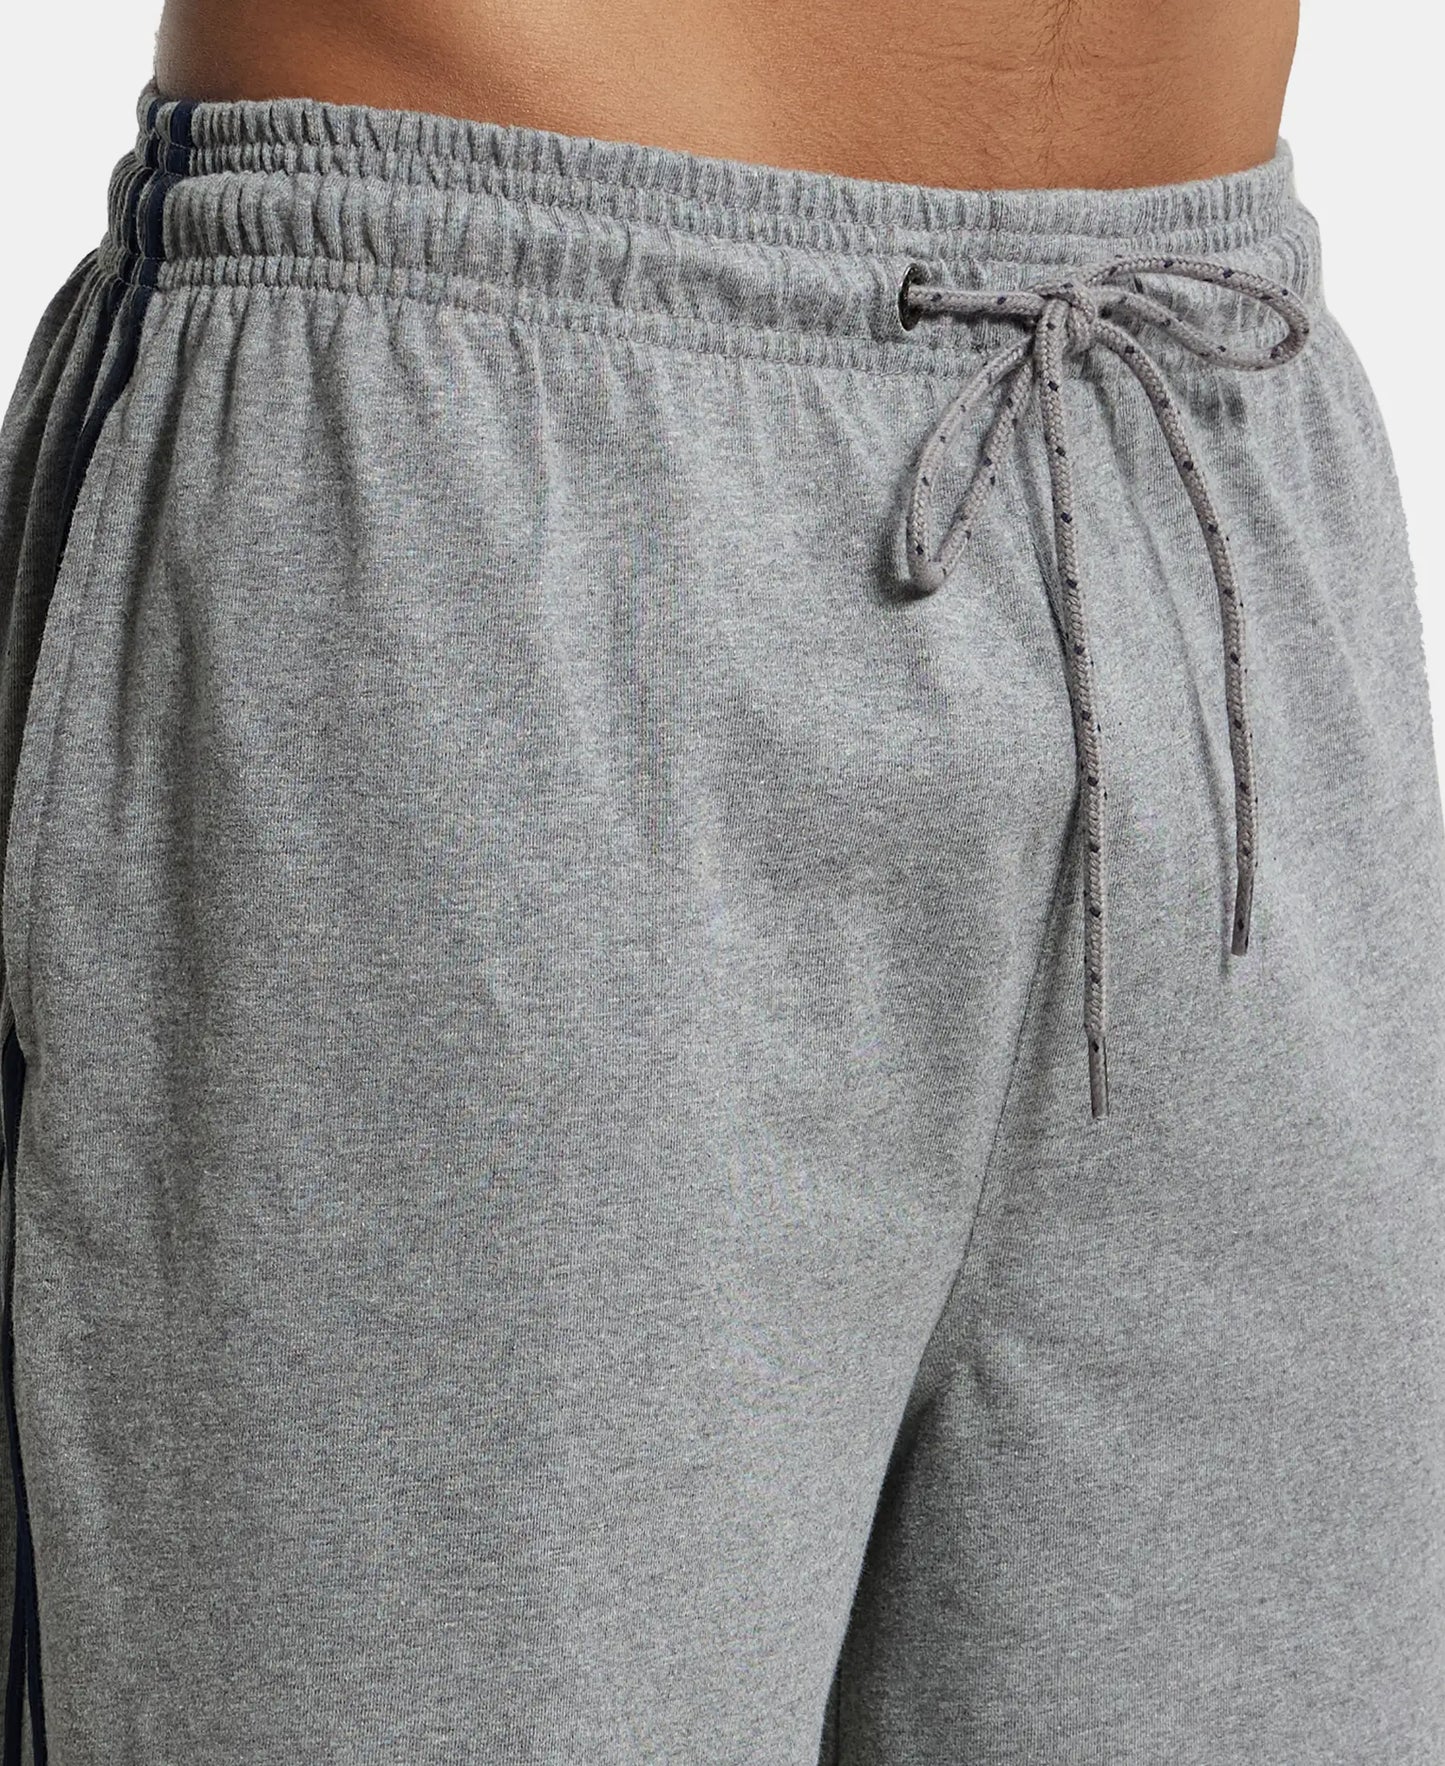 Super Combed Cotton Rich Regular Fit Shorts with Side Pockets - Grey Melange & Navy-6